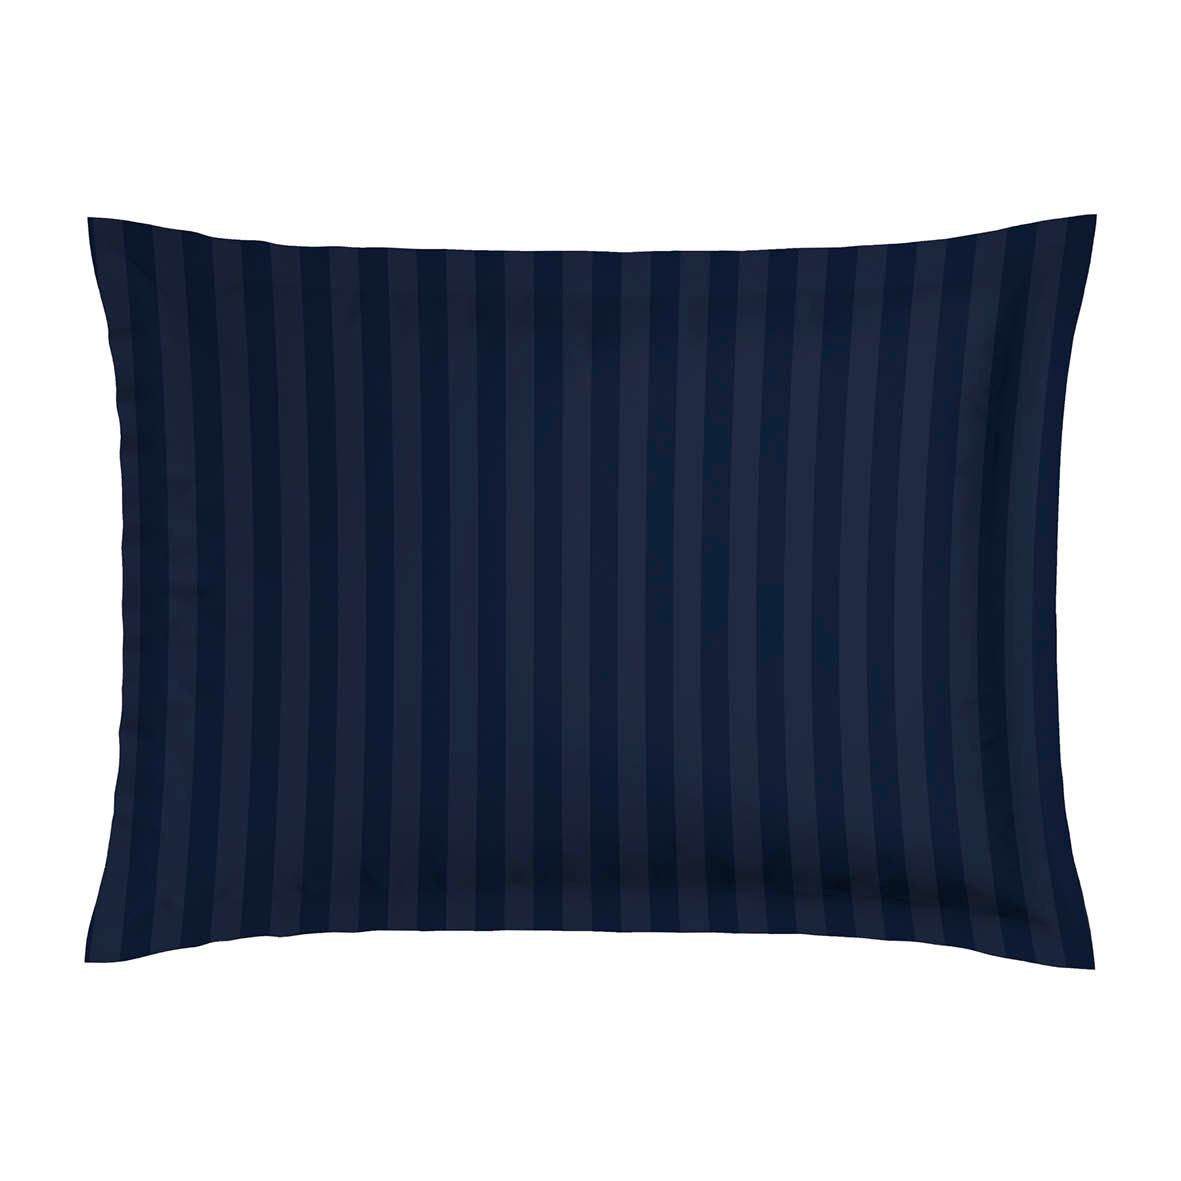 Pillowcase(s) cotton satin - Meadow dark blue